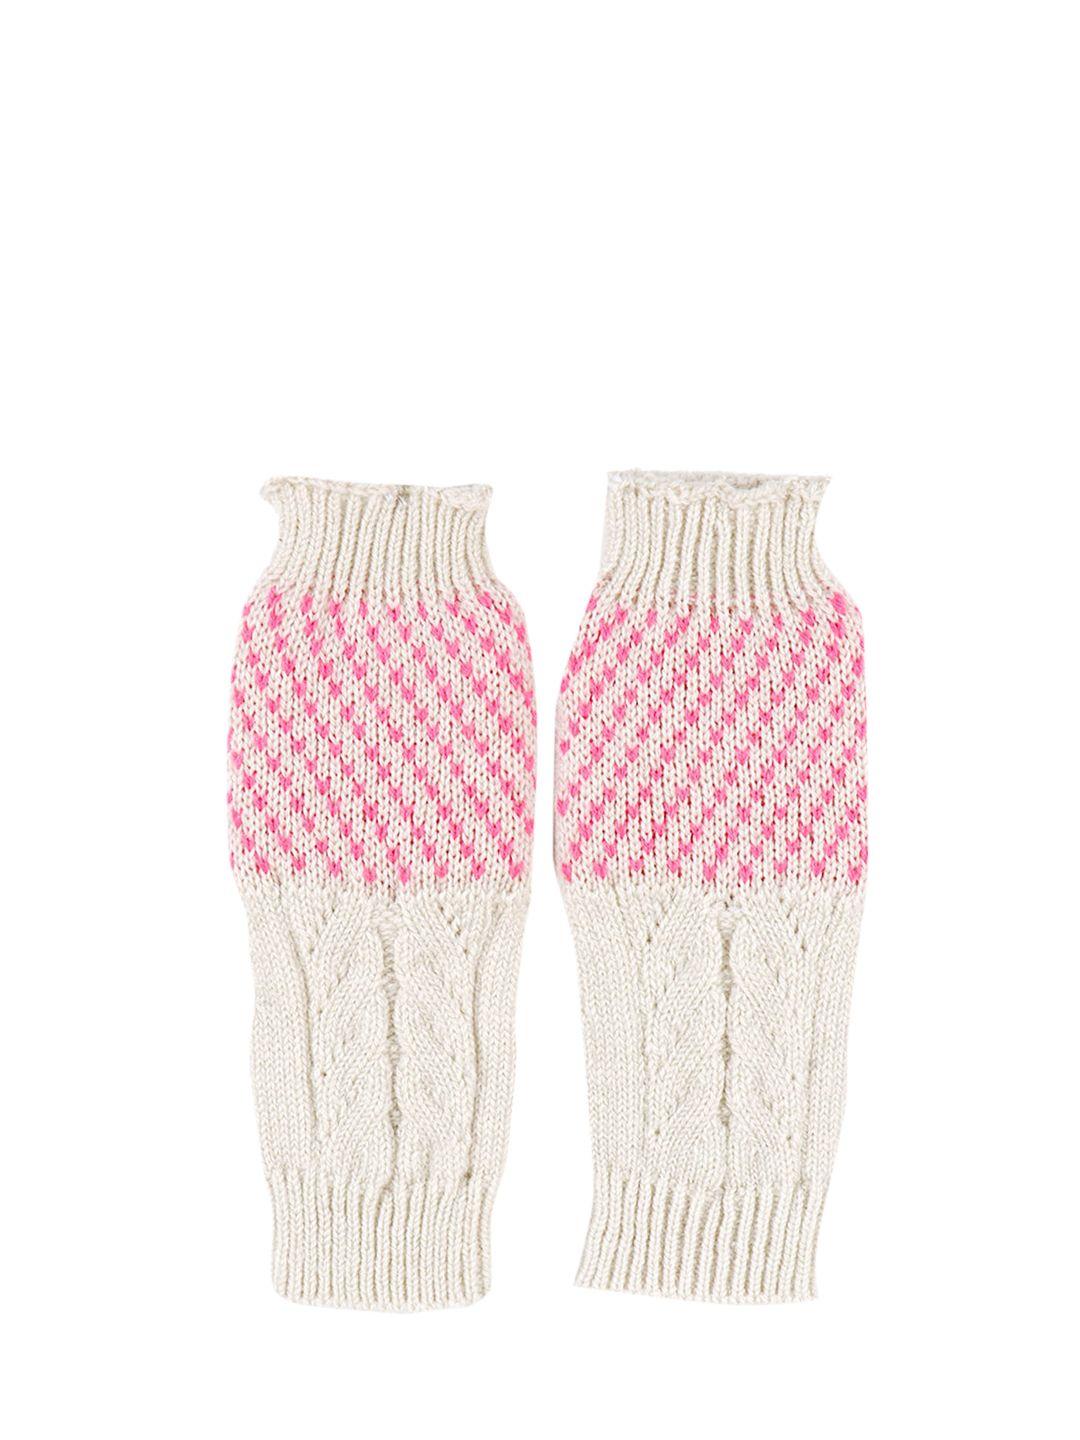 bharatasya kids white & pink patterned hand gloves